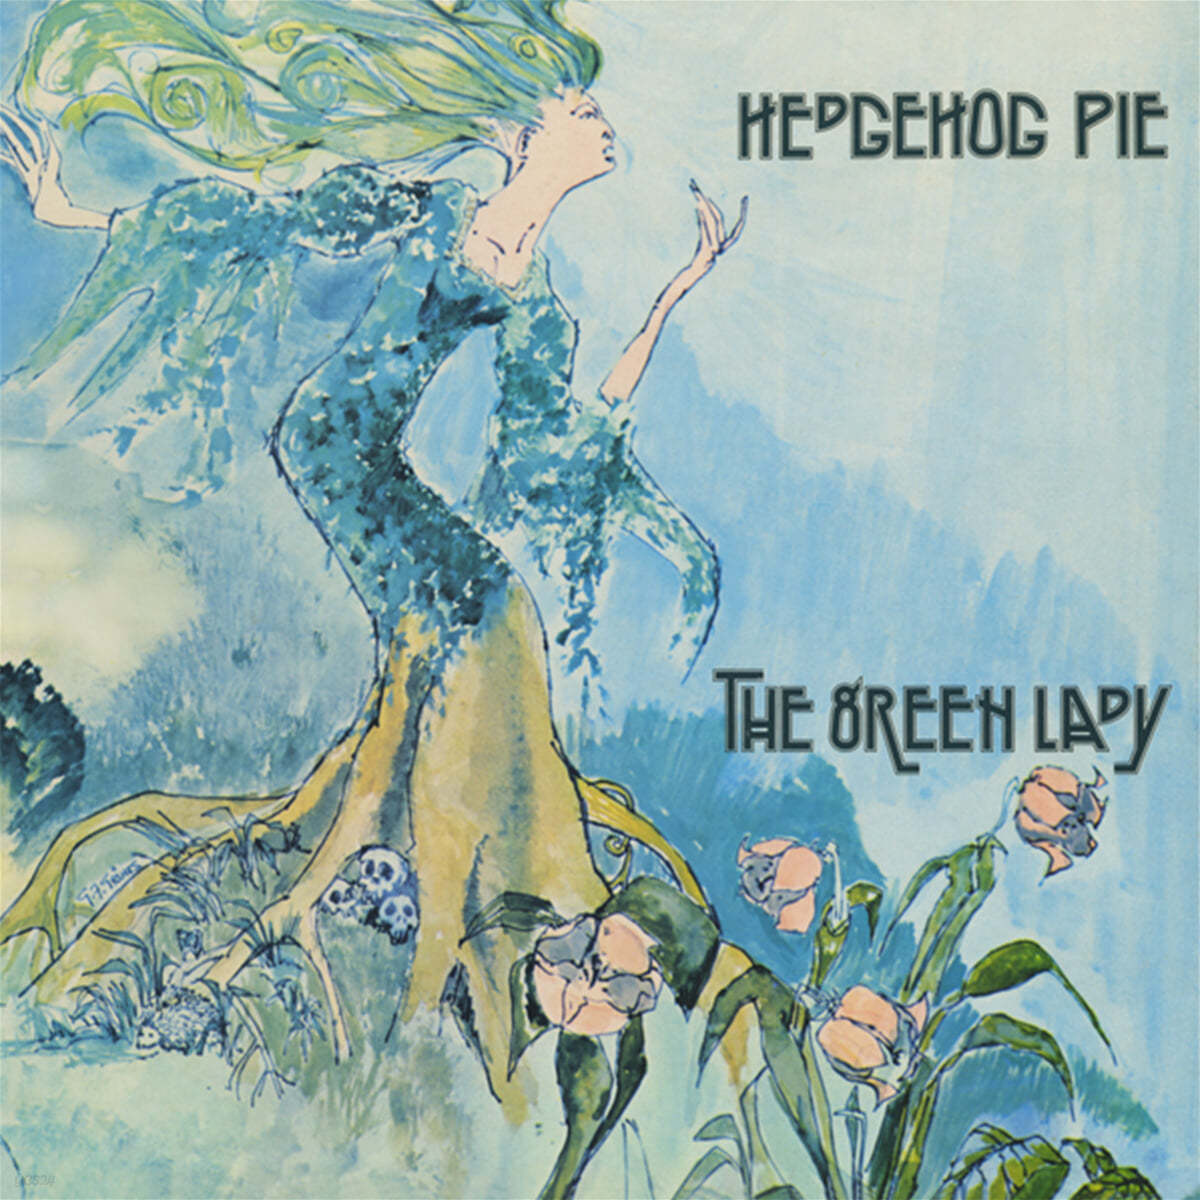 Hedgehog Pie (헤지혹 파이) - The Green Lady